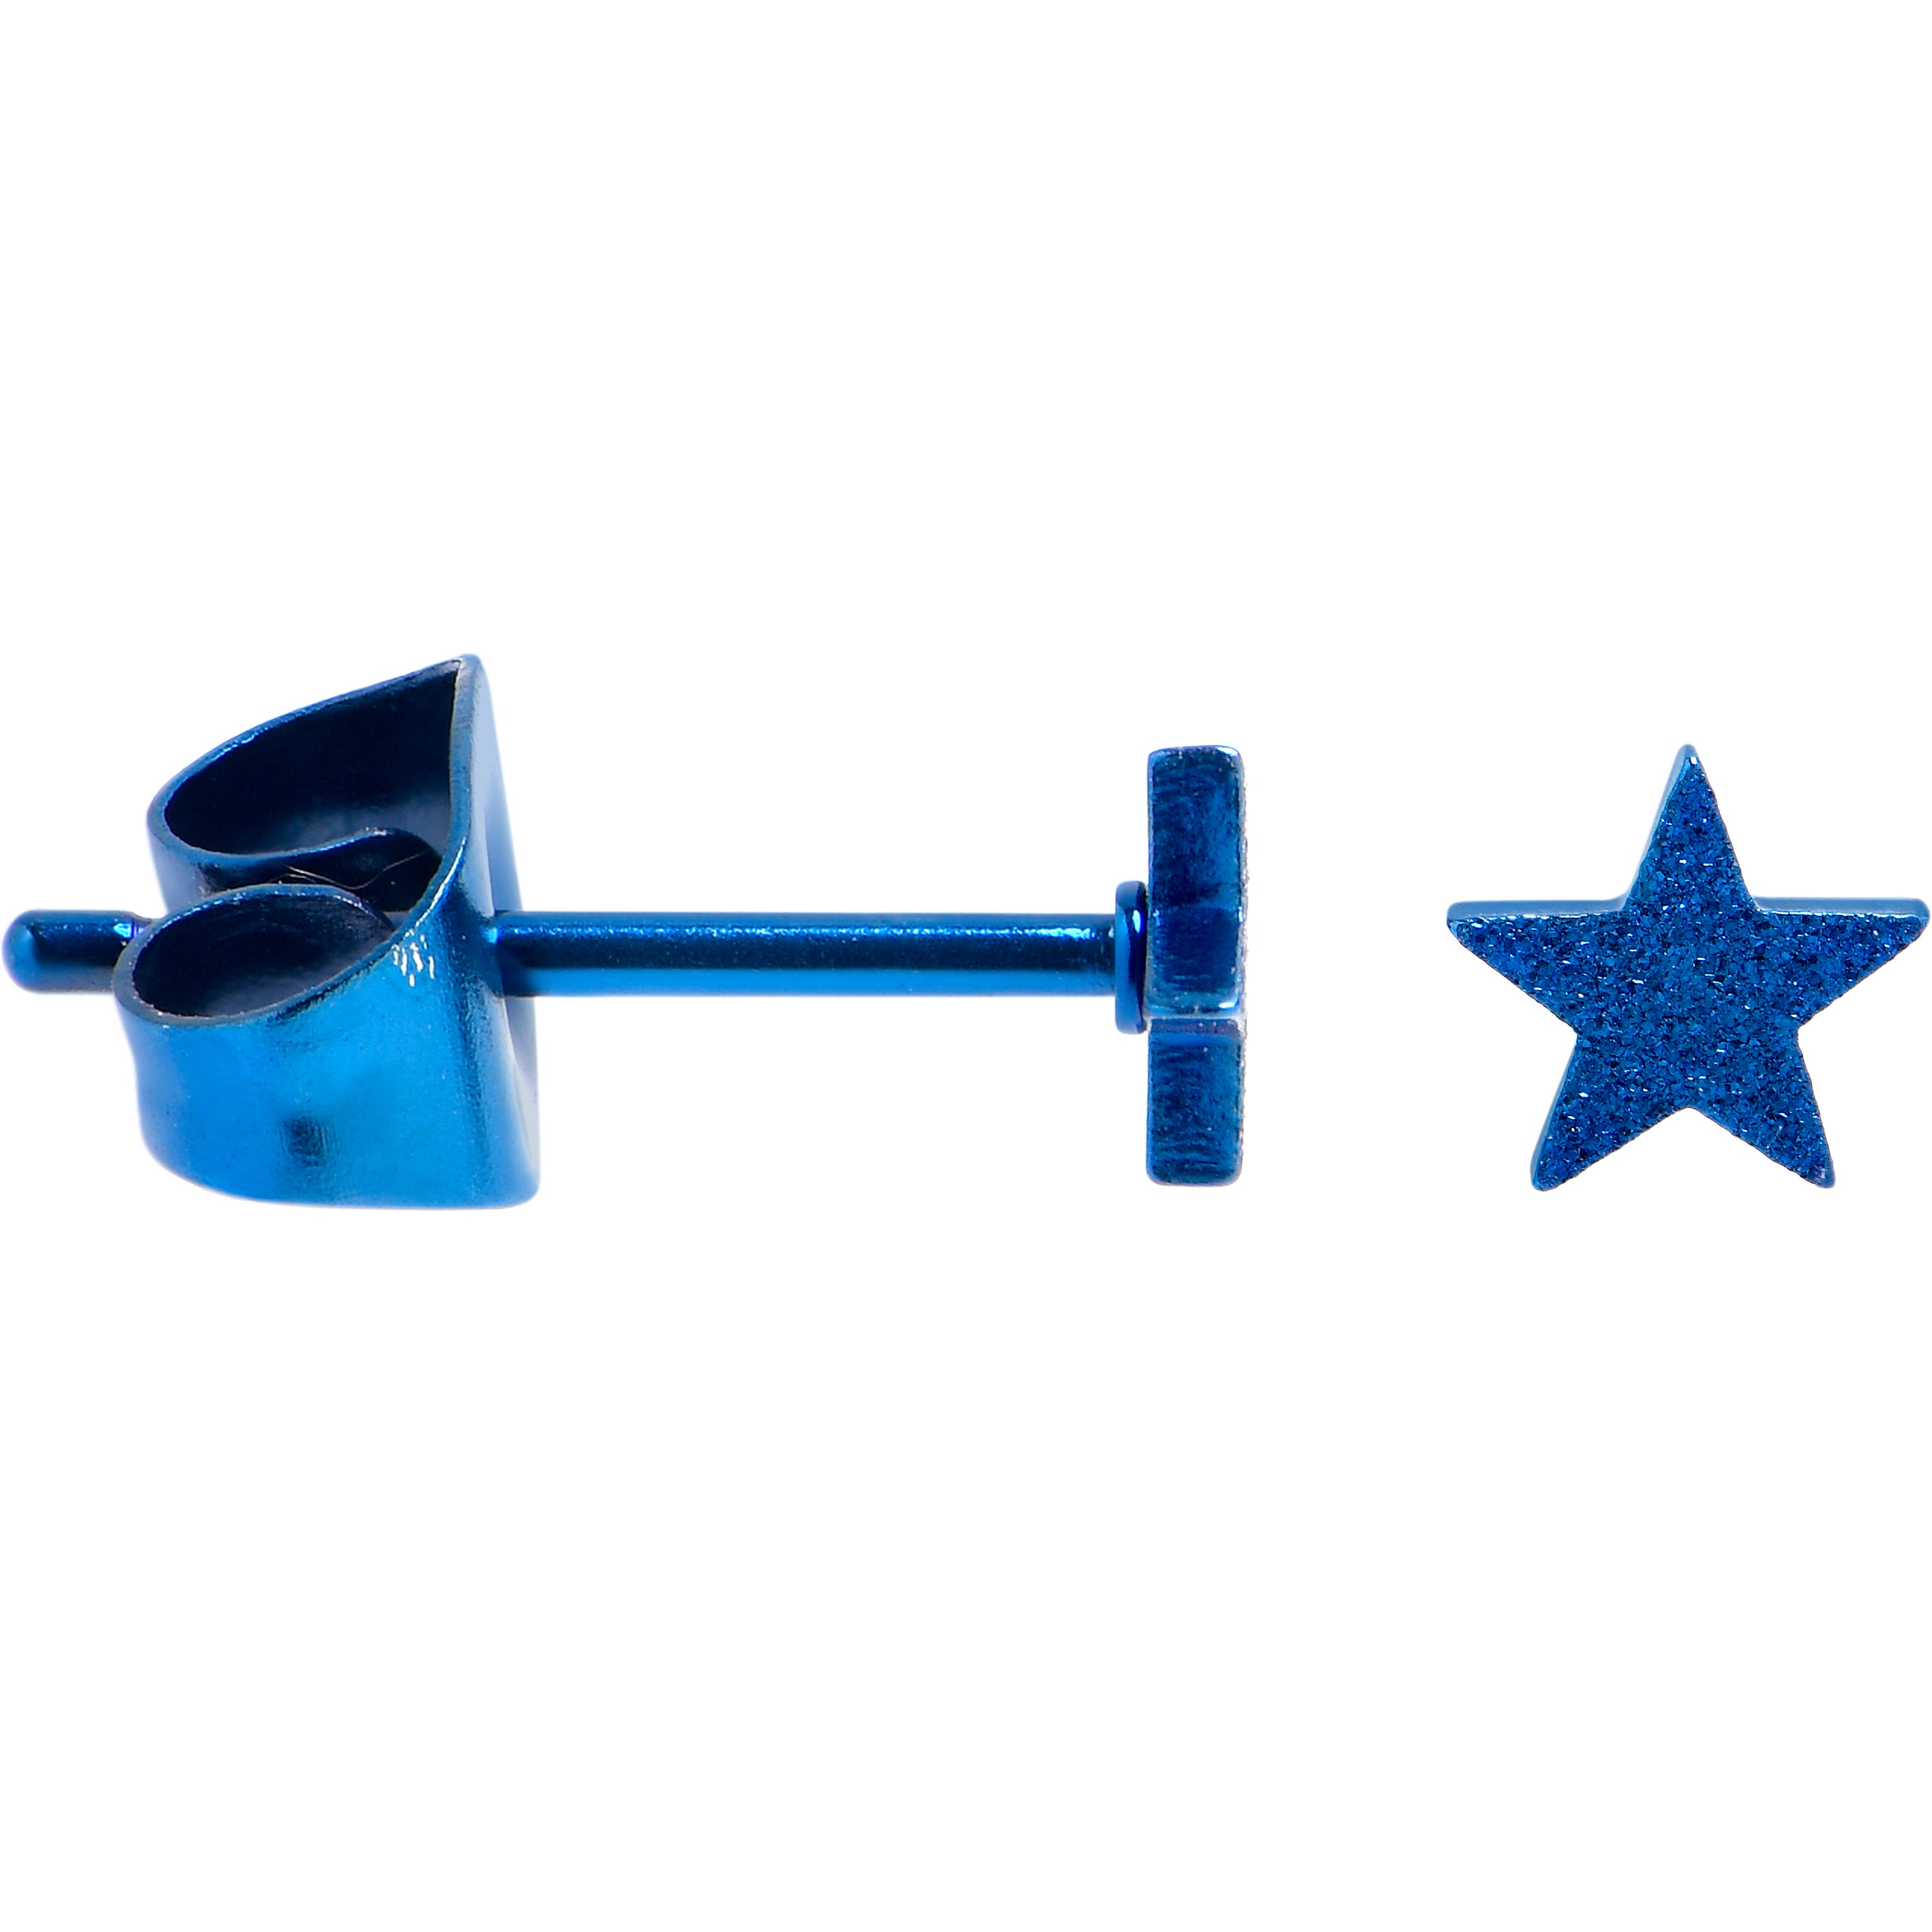 4mm-8mm Stars Stud Blue 316L Stainless Steel Earrings 6 Pack